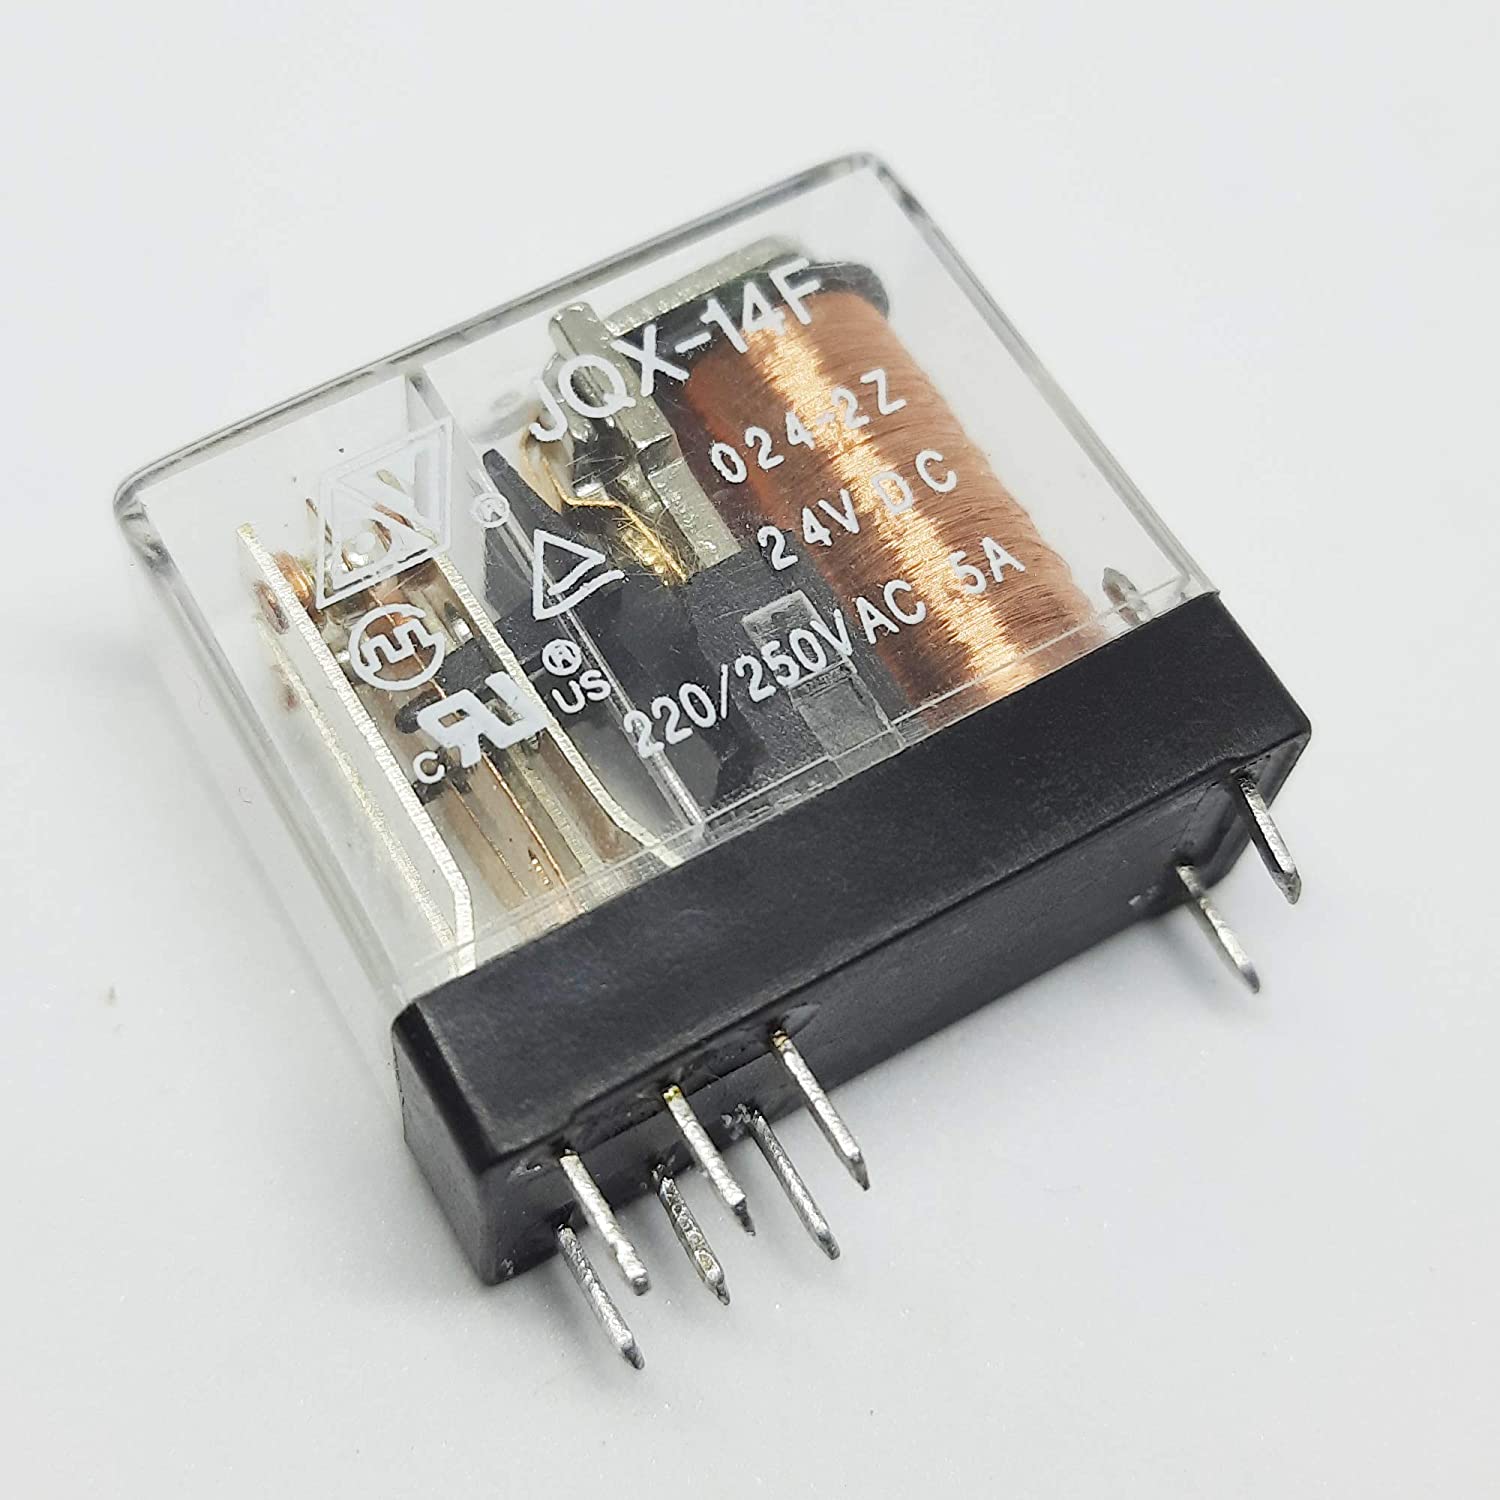 24V DPDT Glass Relay 8 Pin PCB Type